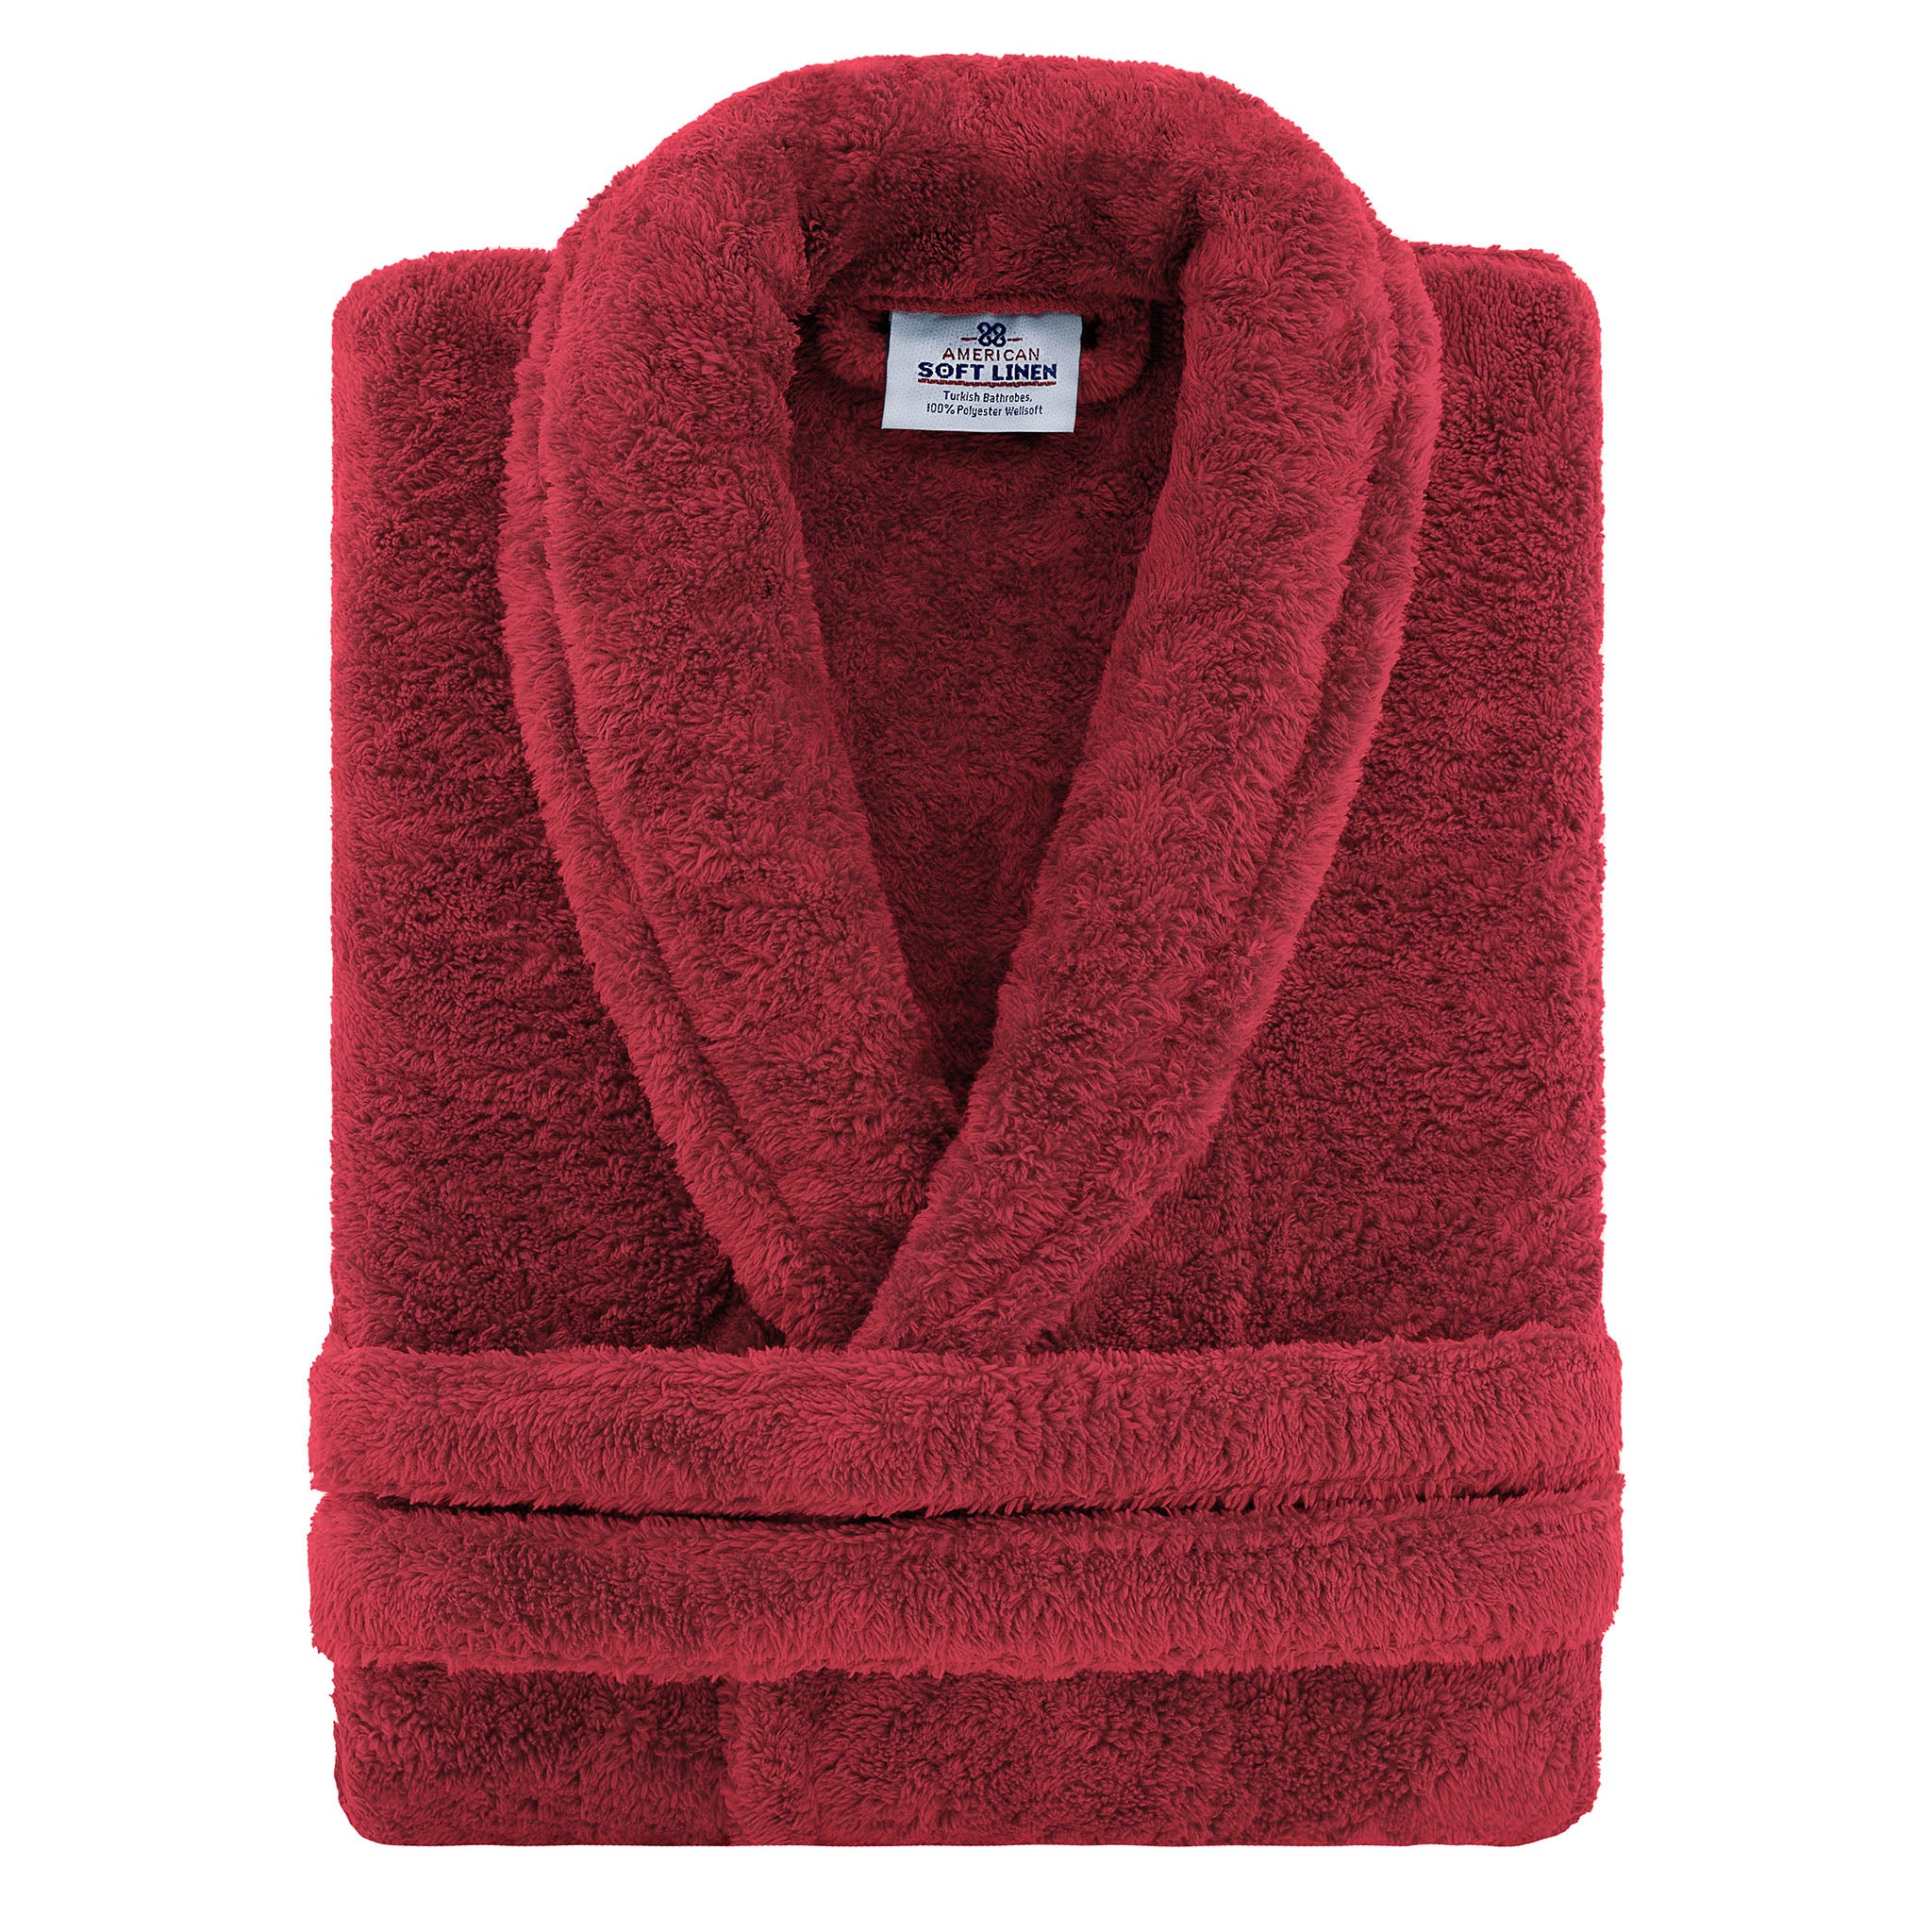 American Soft Linen Super Soft, Absorbent and Fluffy, Unisex Fleece Bathrobe L-XL-Bordeaux-red-3